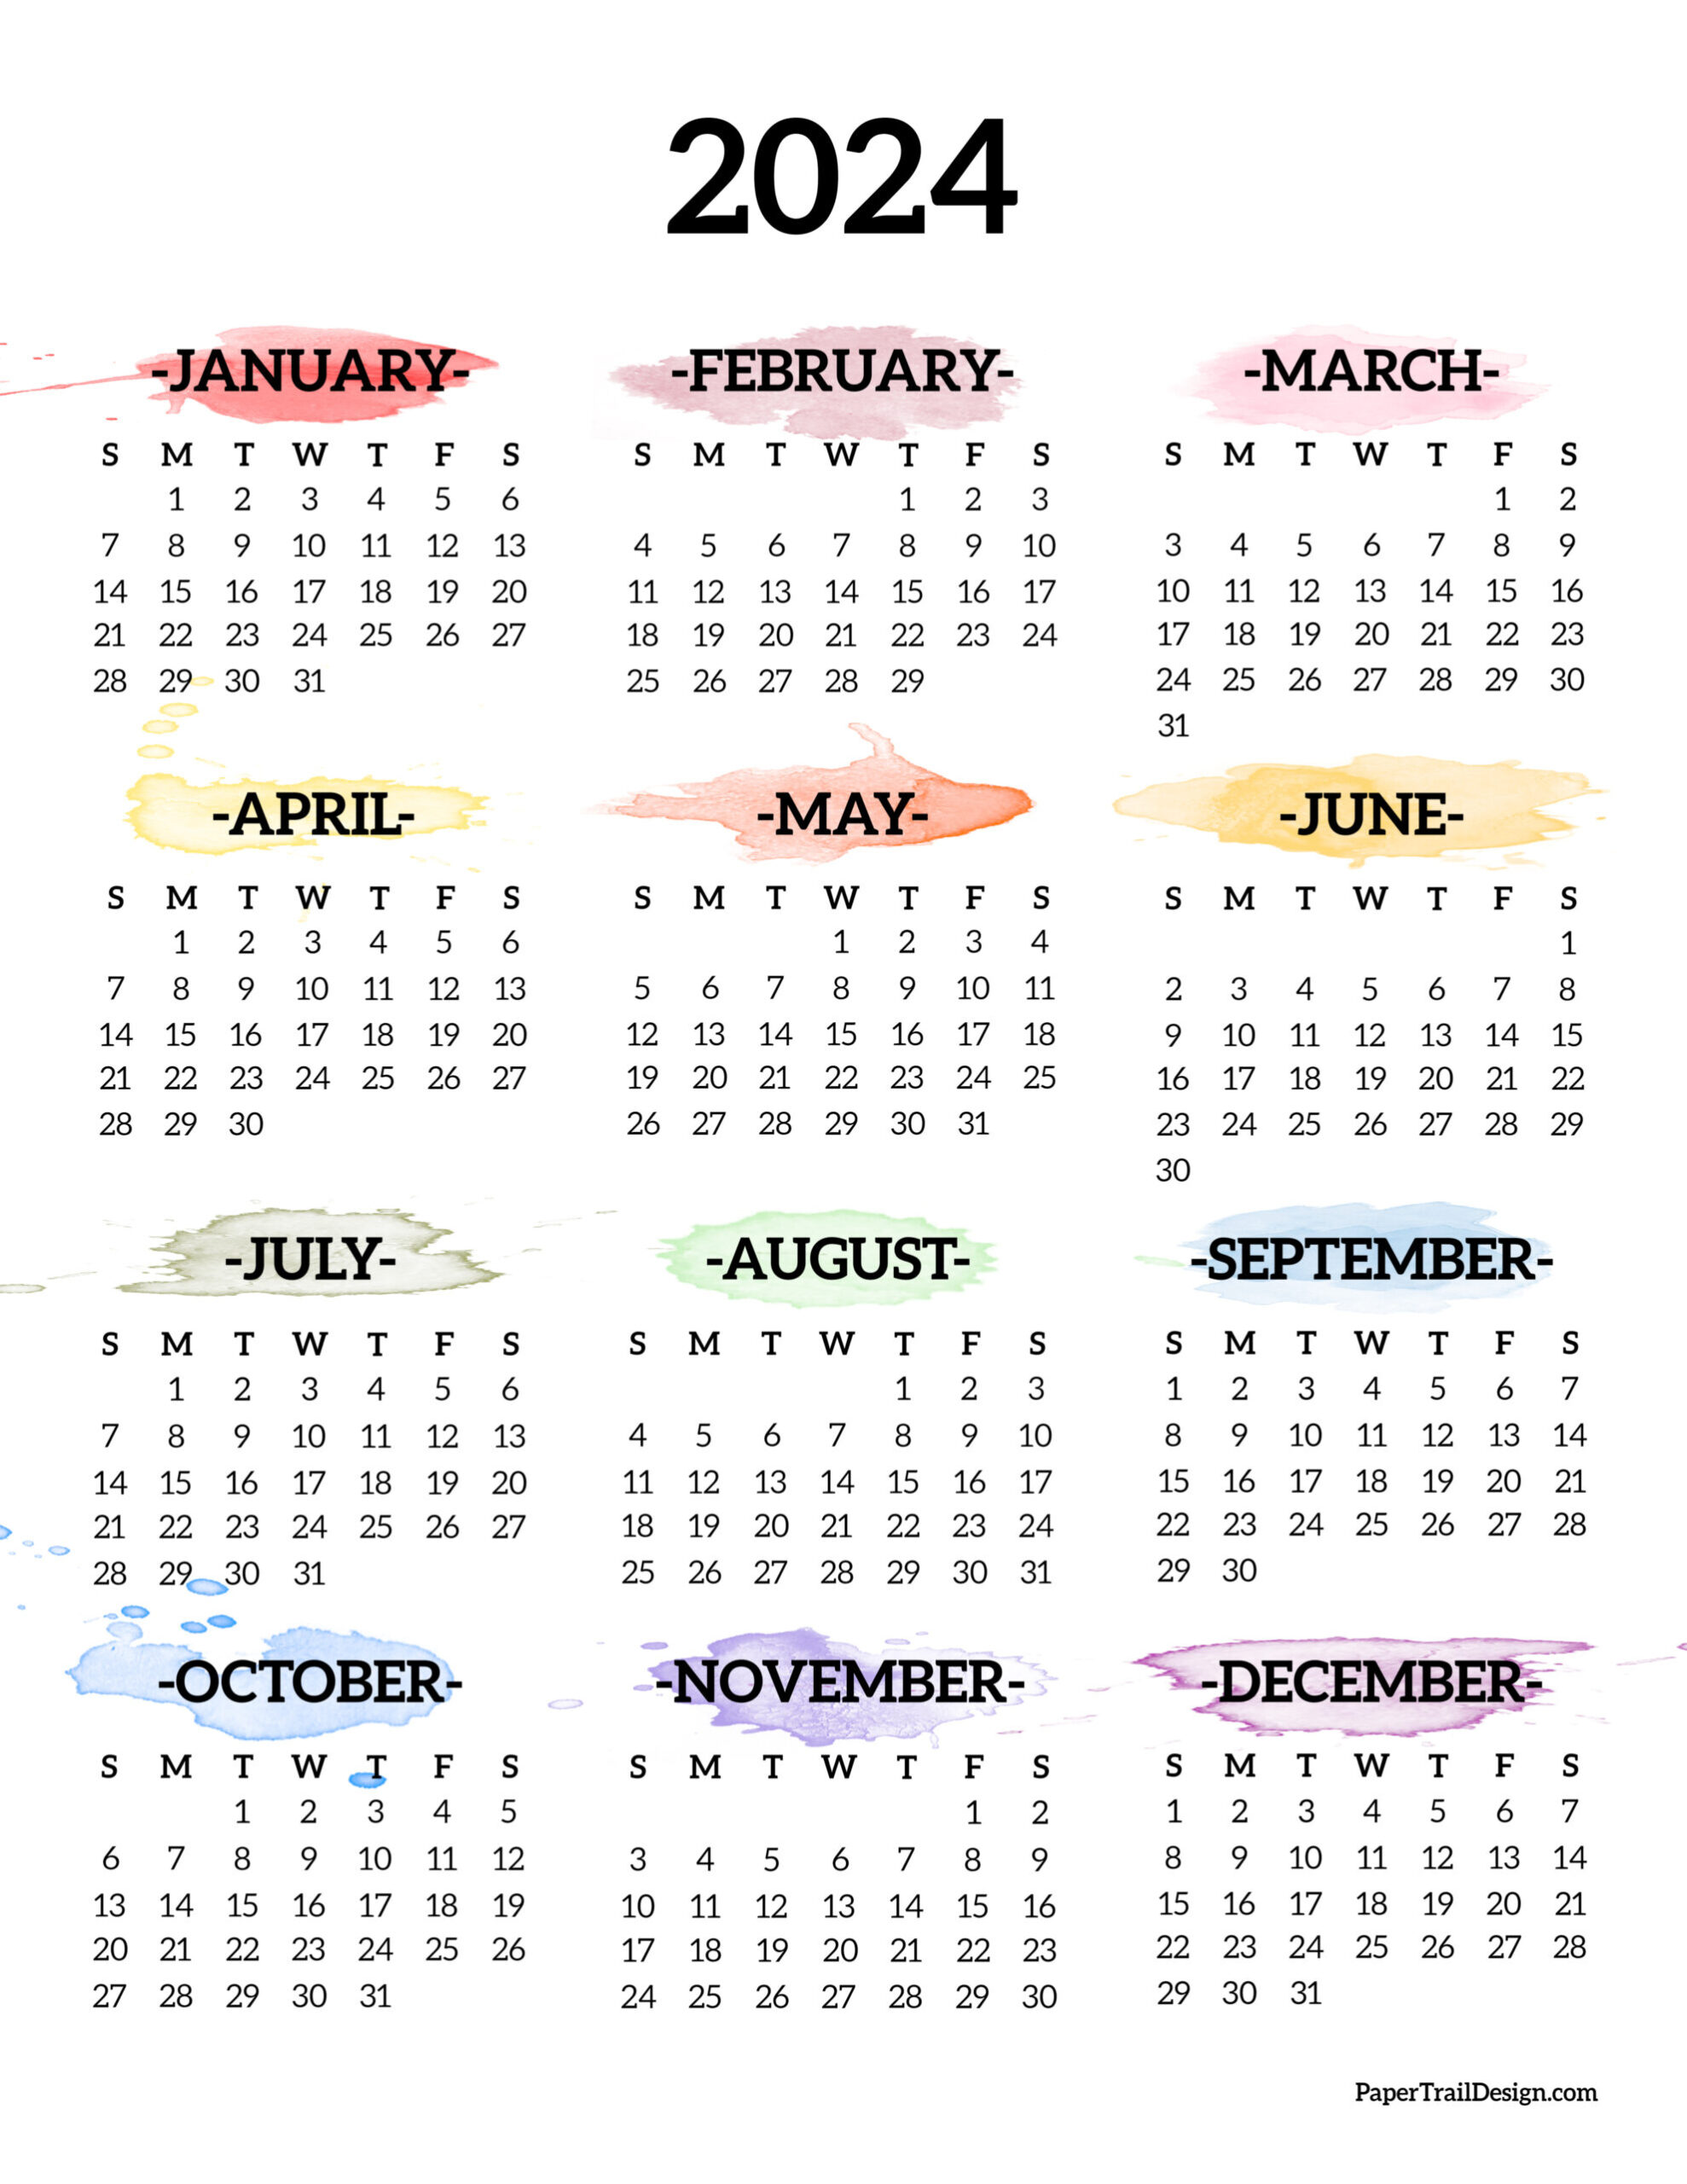 Calendar 2024 Printable One Page - Paper Trail Design | 2024 Year View Calendar Printable